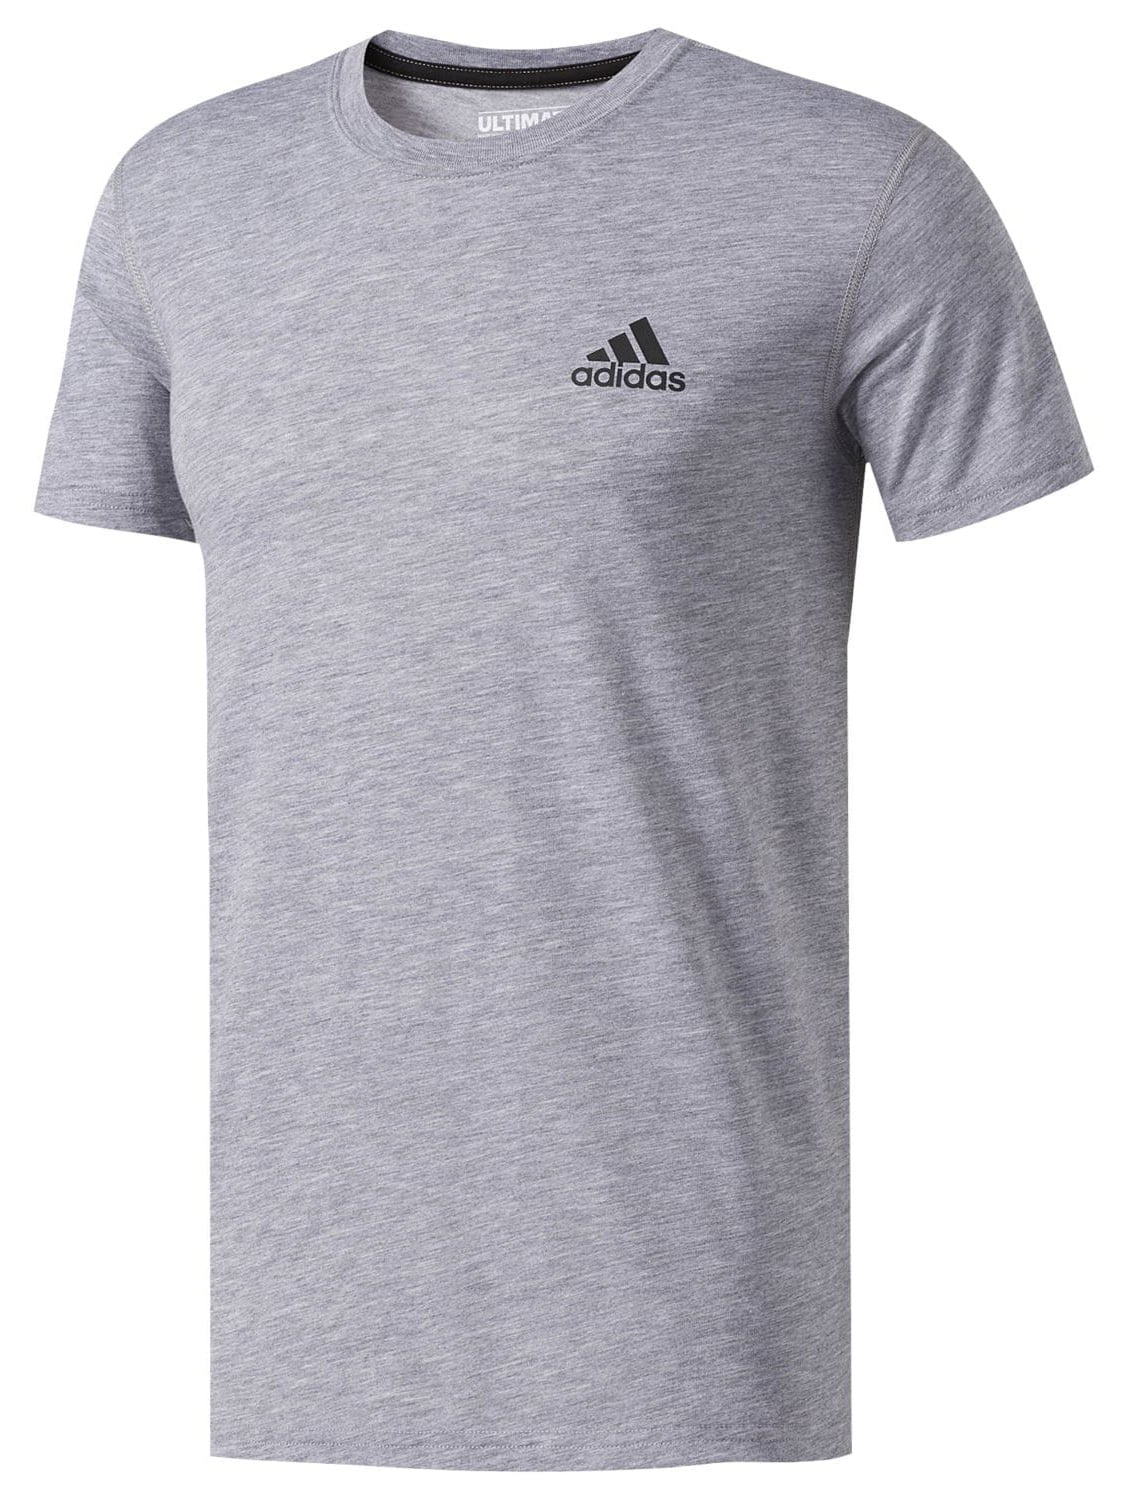 Adidas - Adidas Mens Ultimate Short Sleeve Tee Shirt (Medium Grey ...